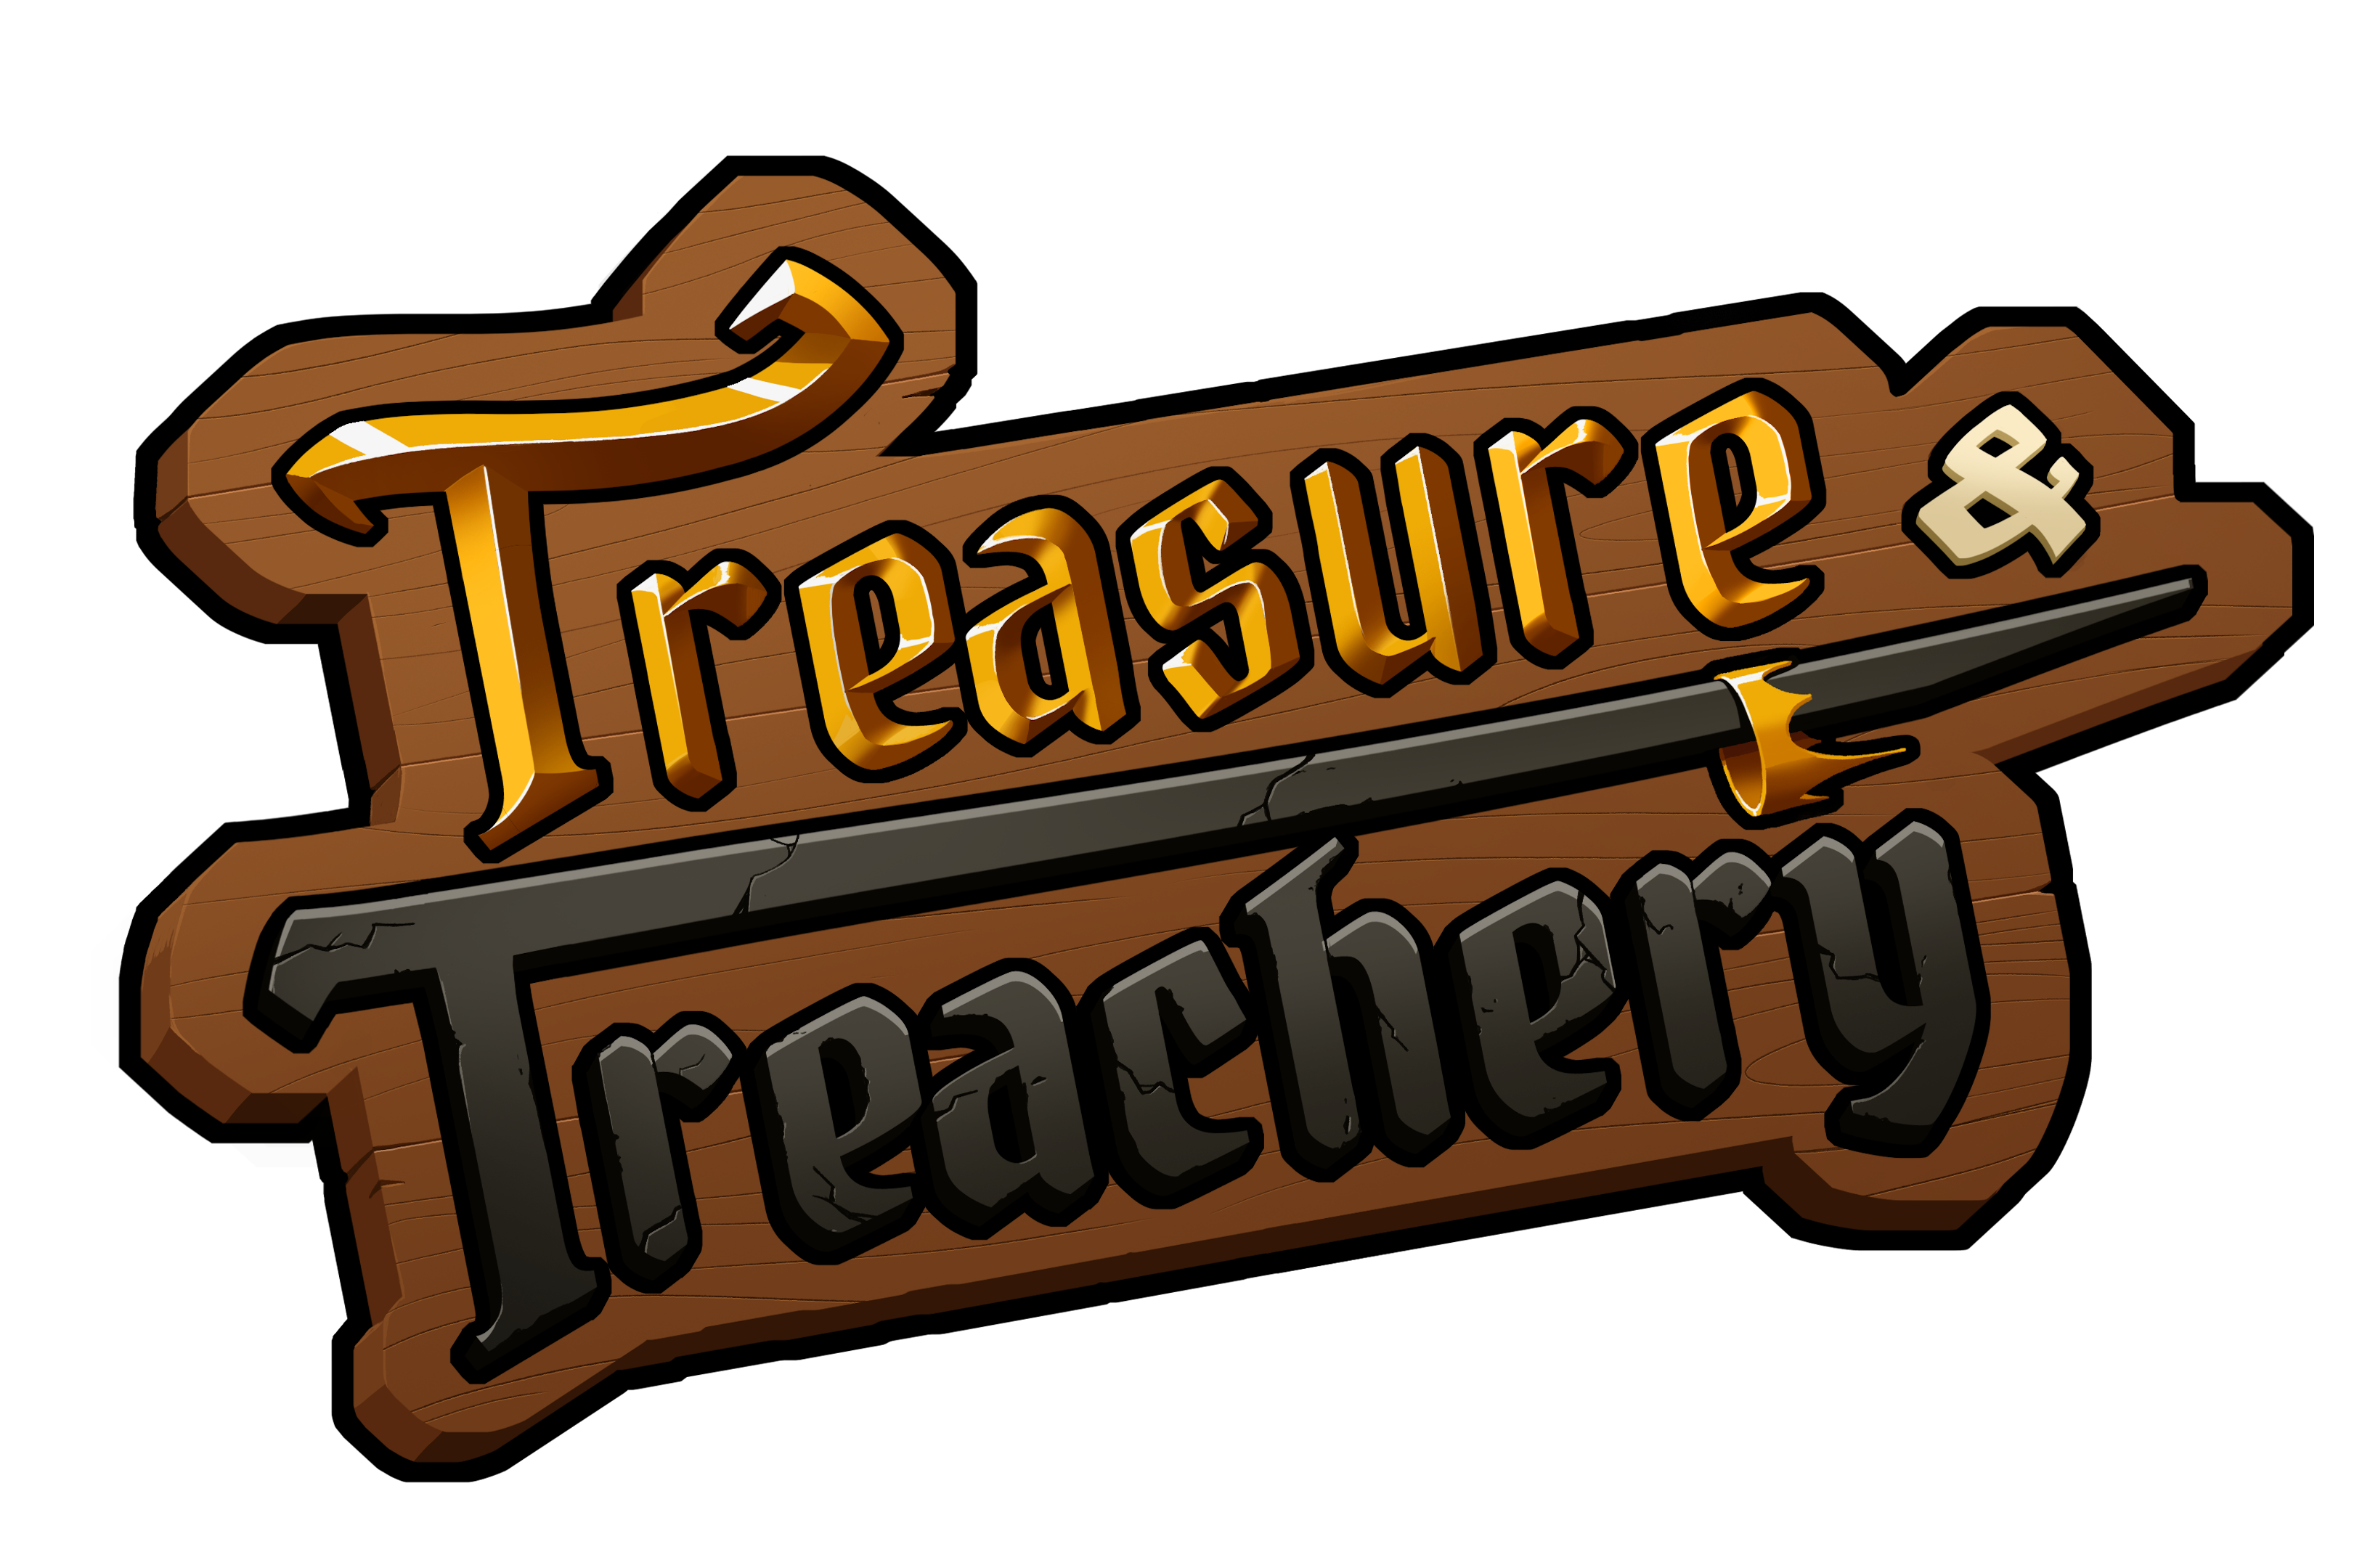 Treasure & Treachery